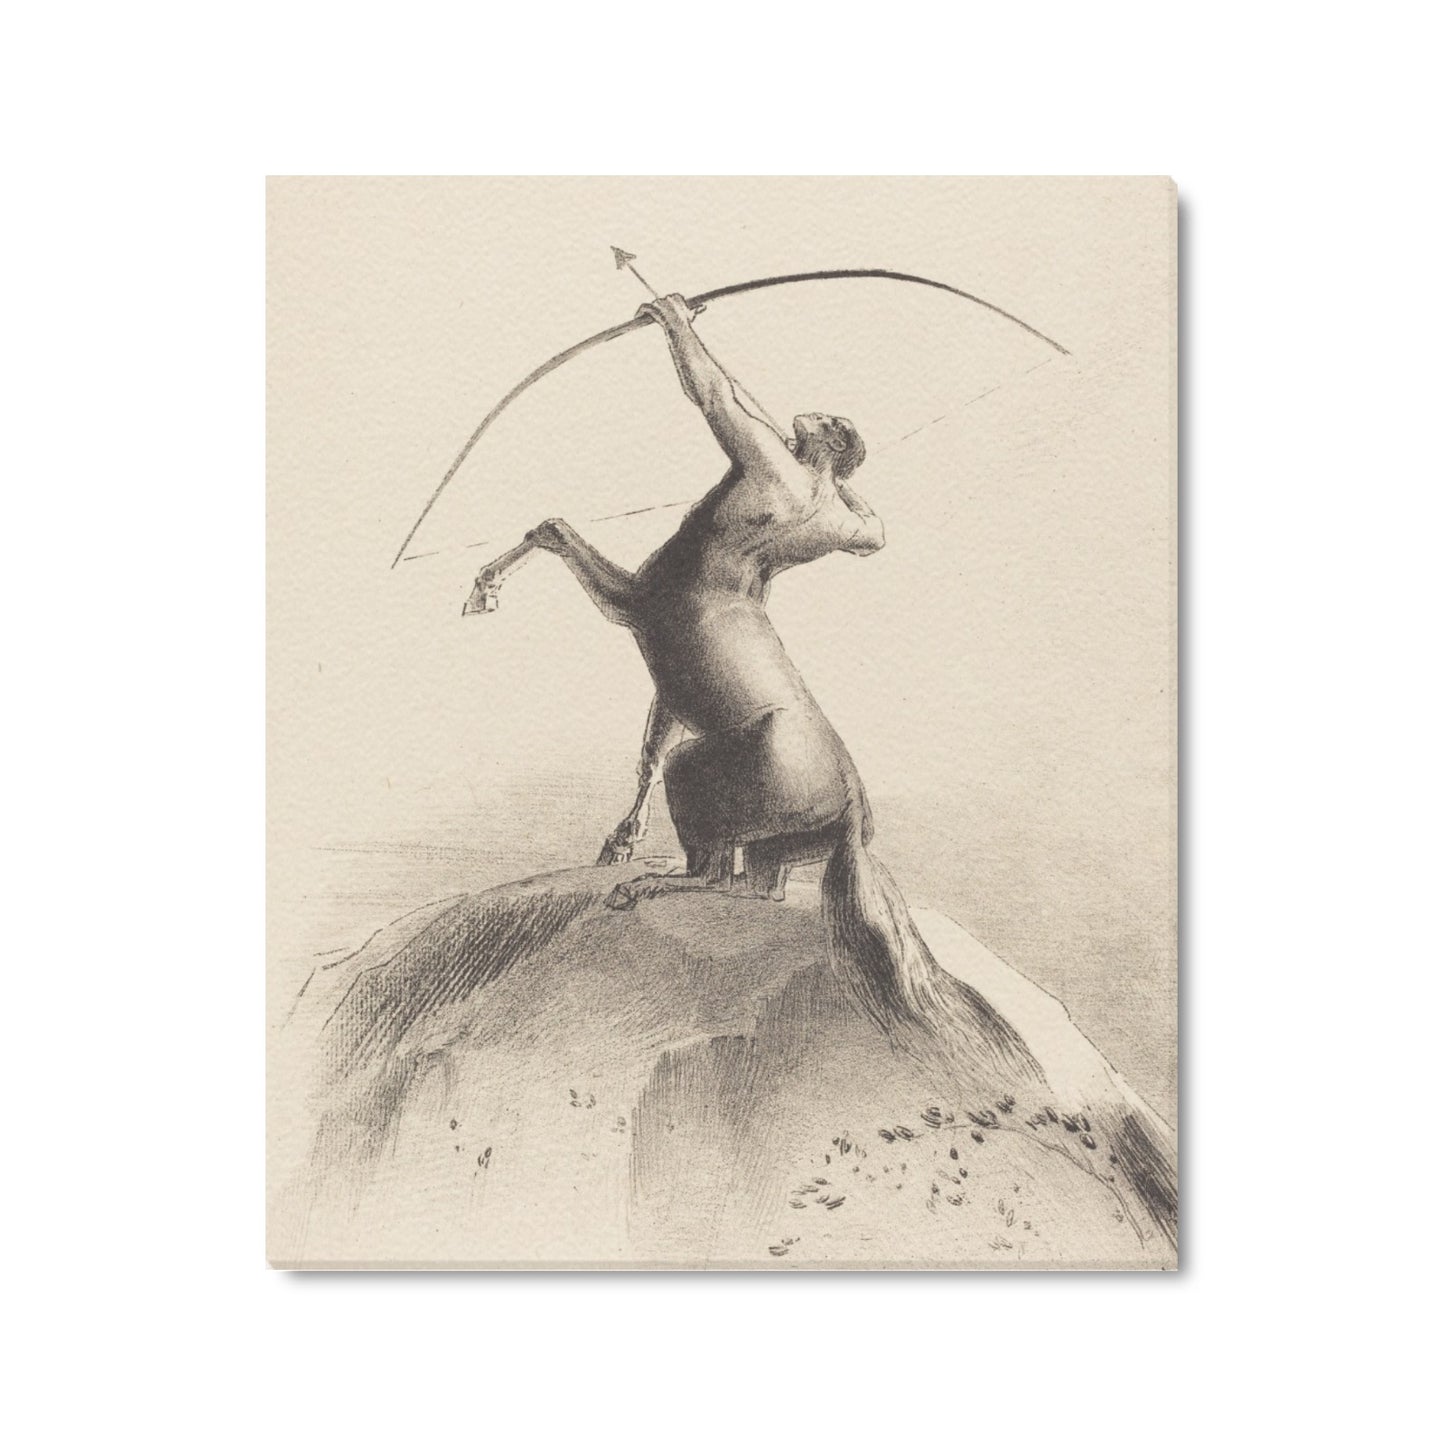 ODILON REDON - CENAUR AIMING AT THE CLOUDES (1895) - CANVAS PRINT 20"x 24"